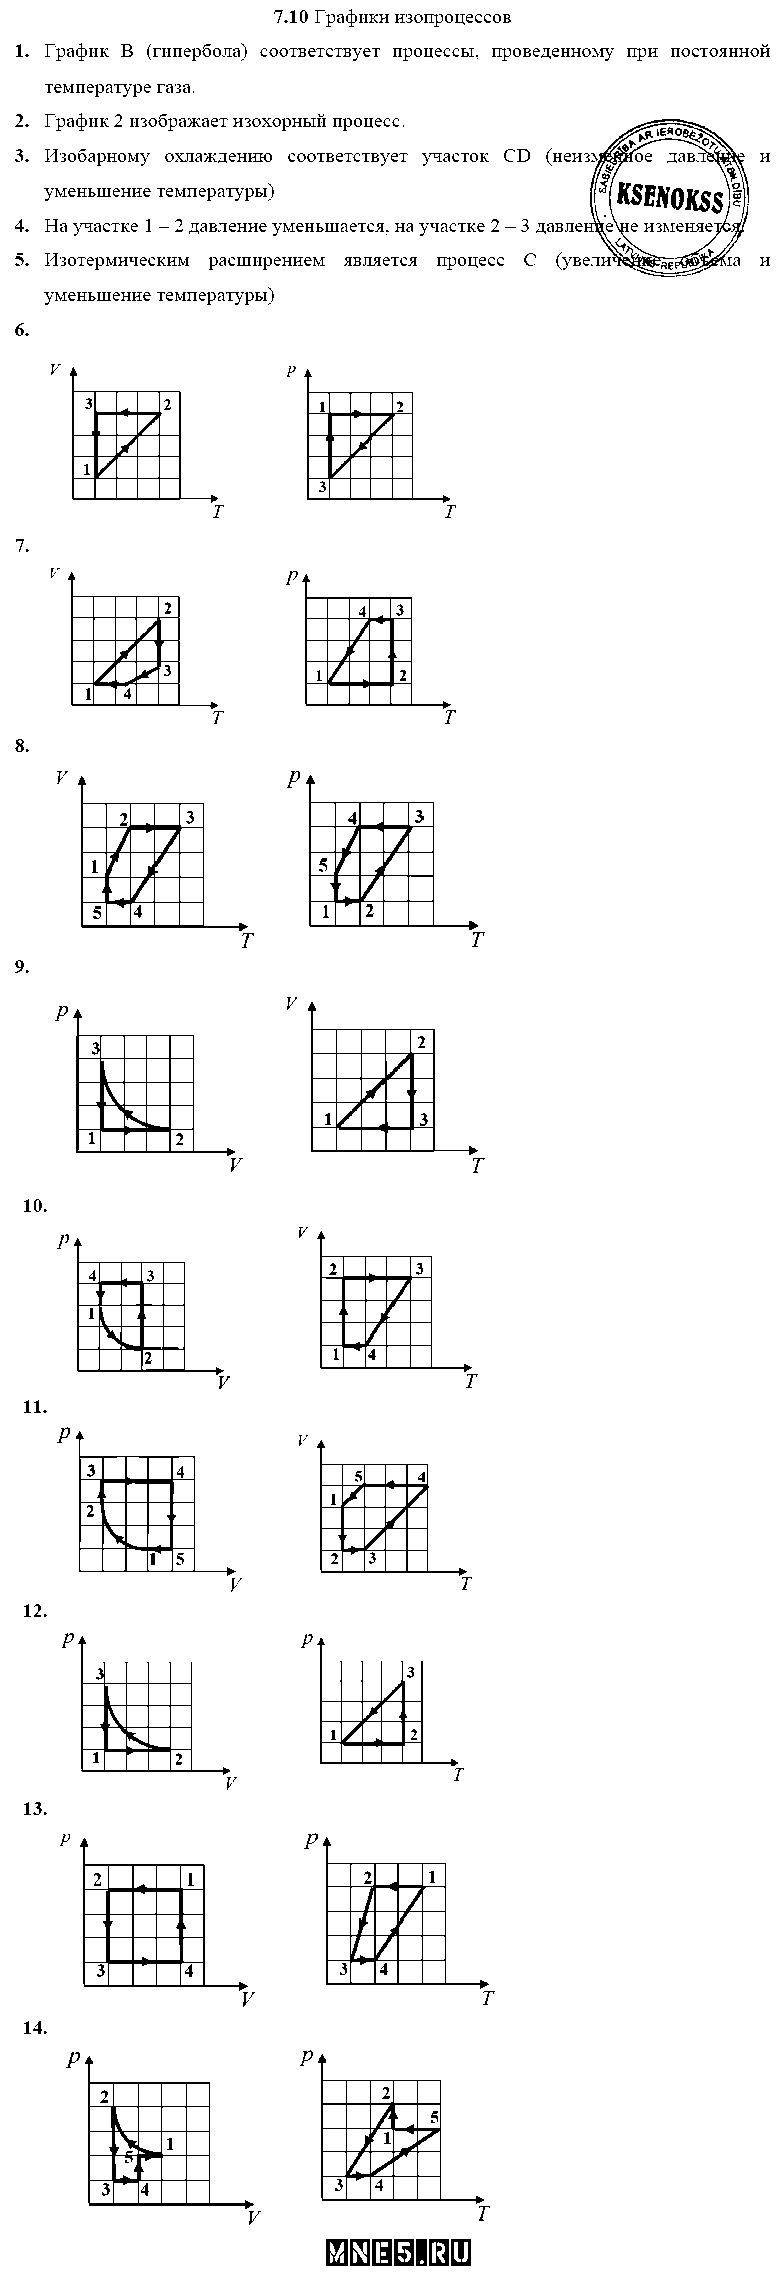 ГДЗ Физика 10 класс - 7.10. Графики изопроцессов